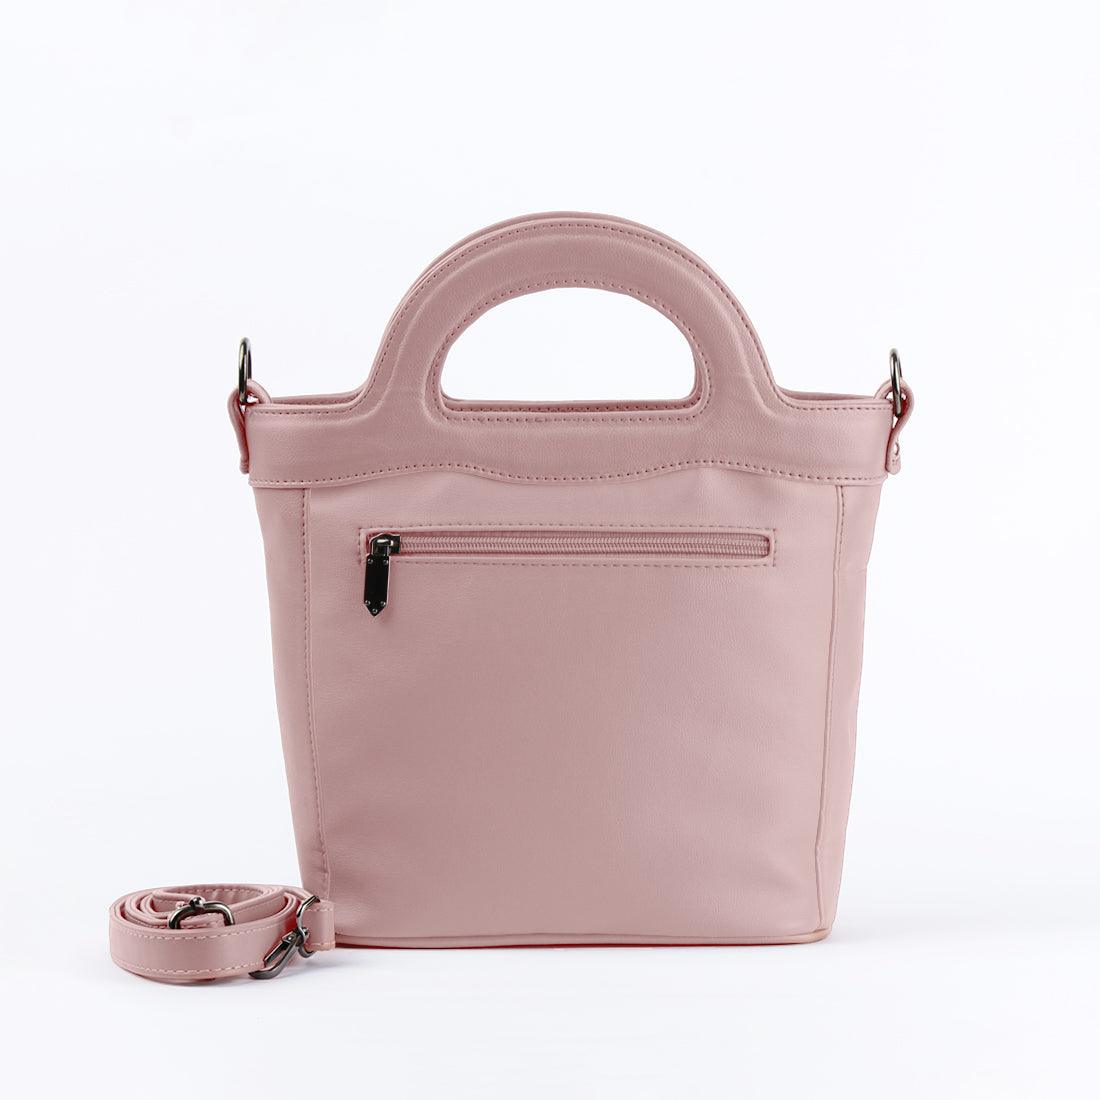 Rose Top Handle Handbag Purple Floral - CANVAEGYPT